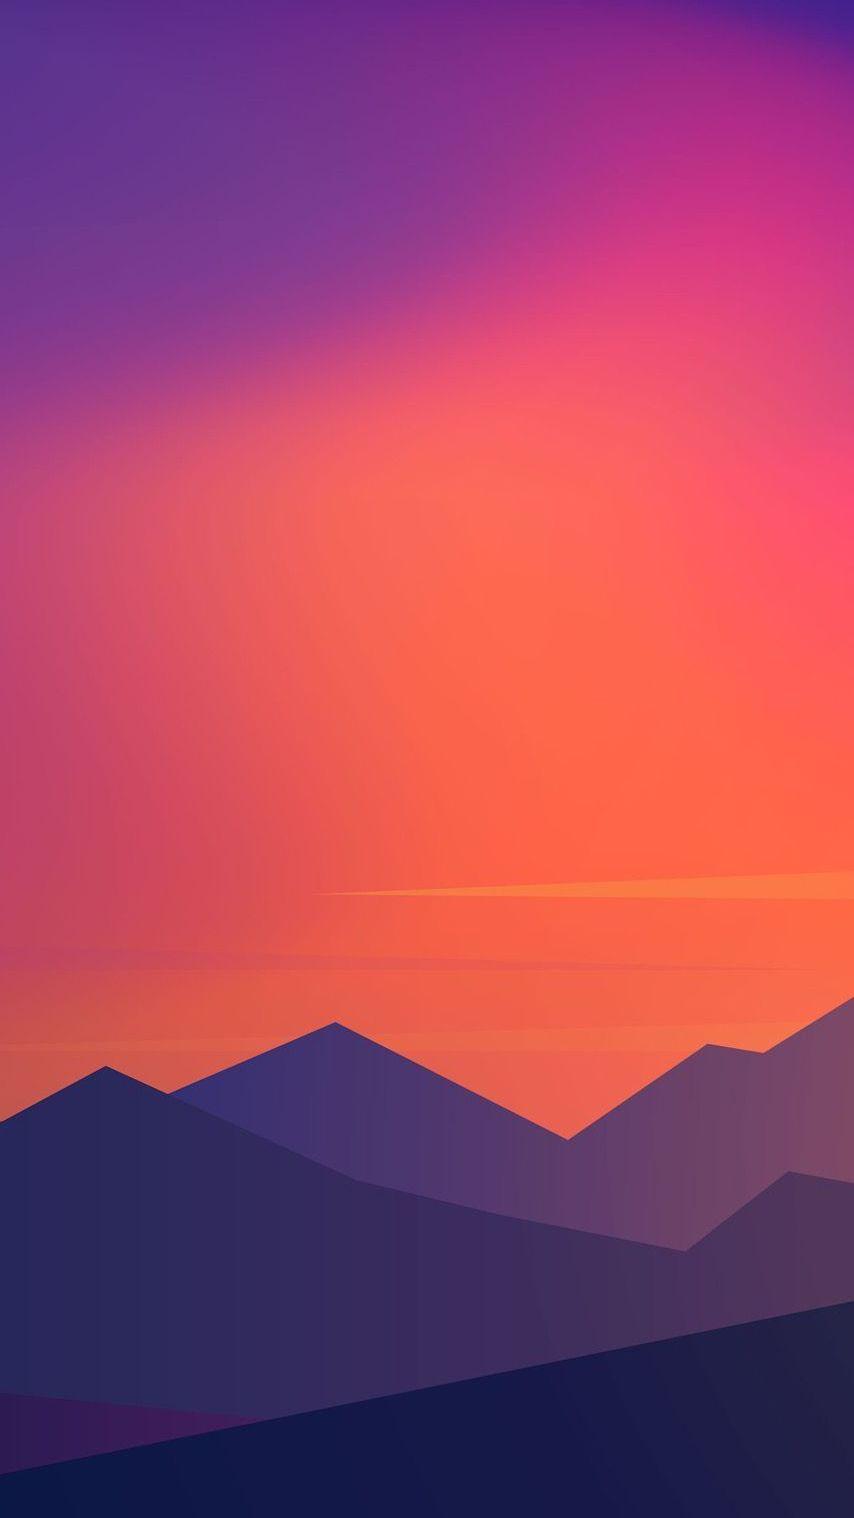 Free download Sunset Minimal Mountains iPhone Wallpaper Aesthetic